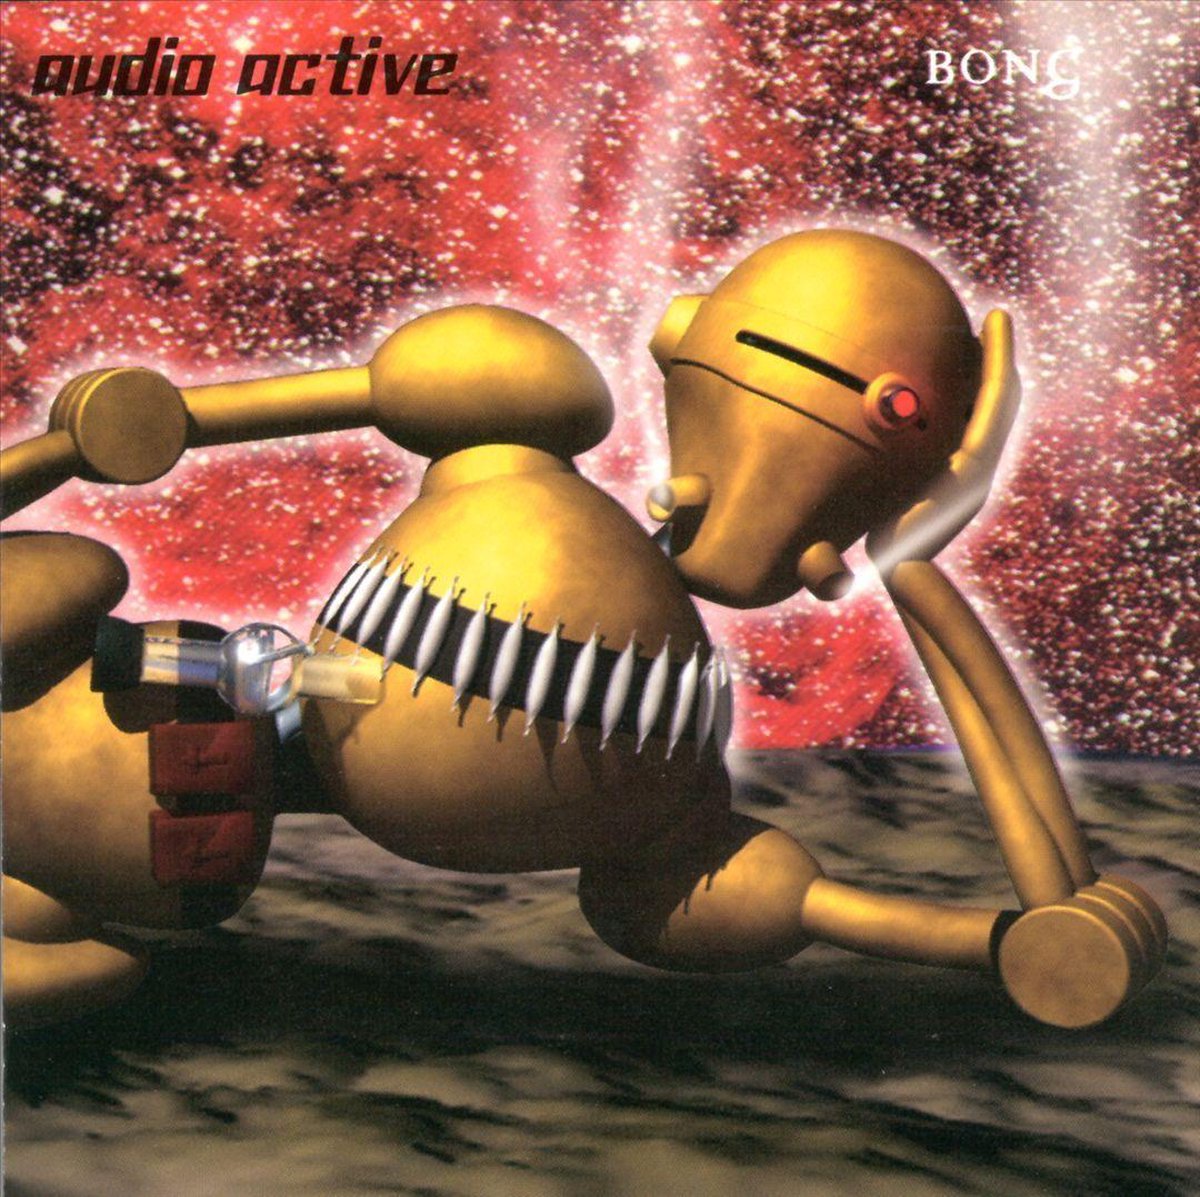 Bong - Audio Active